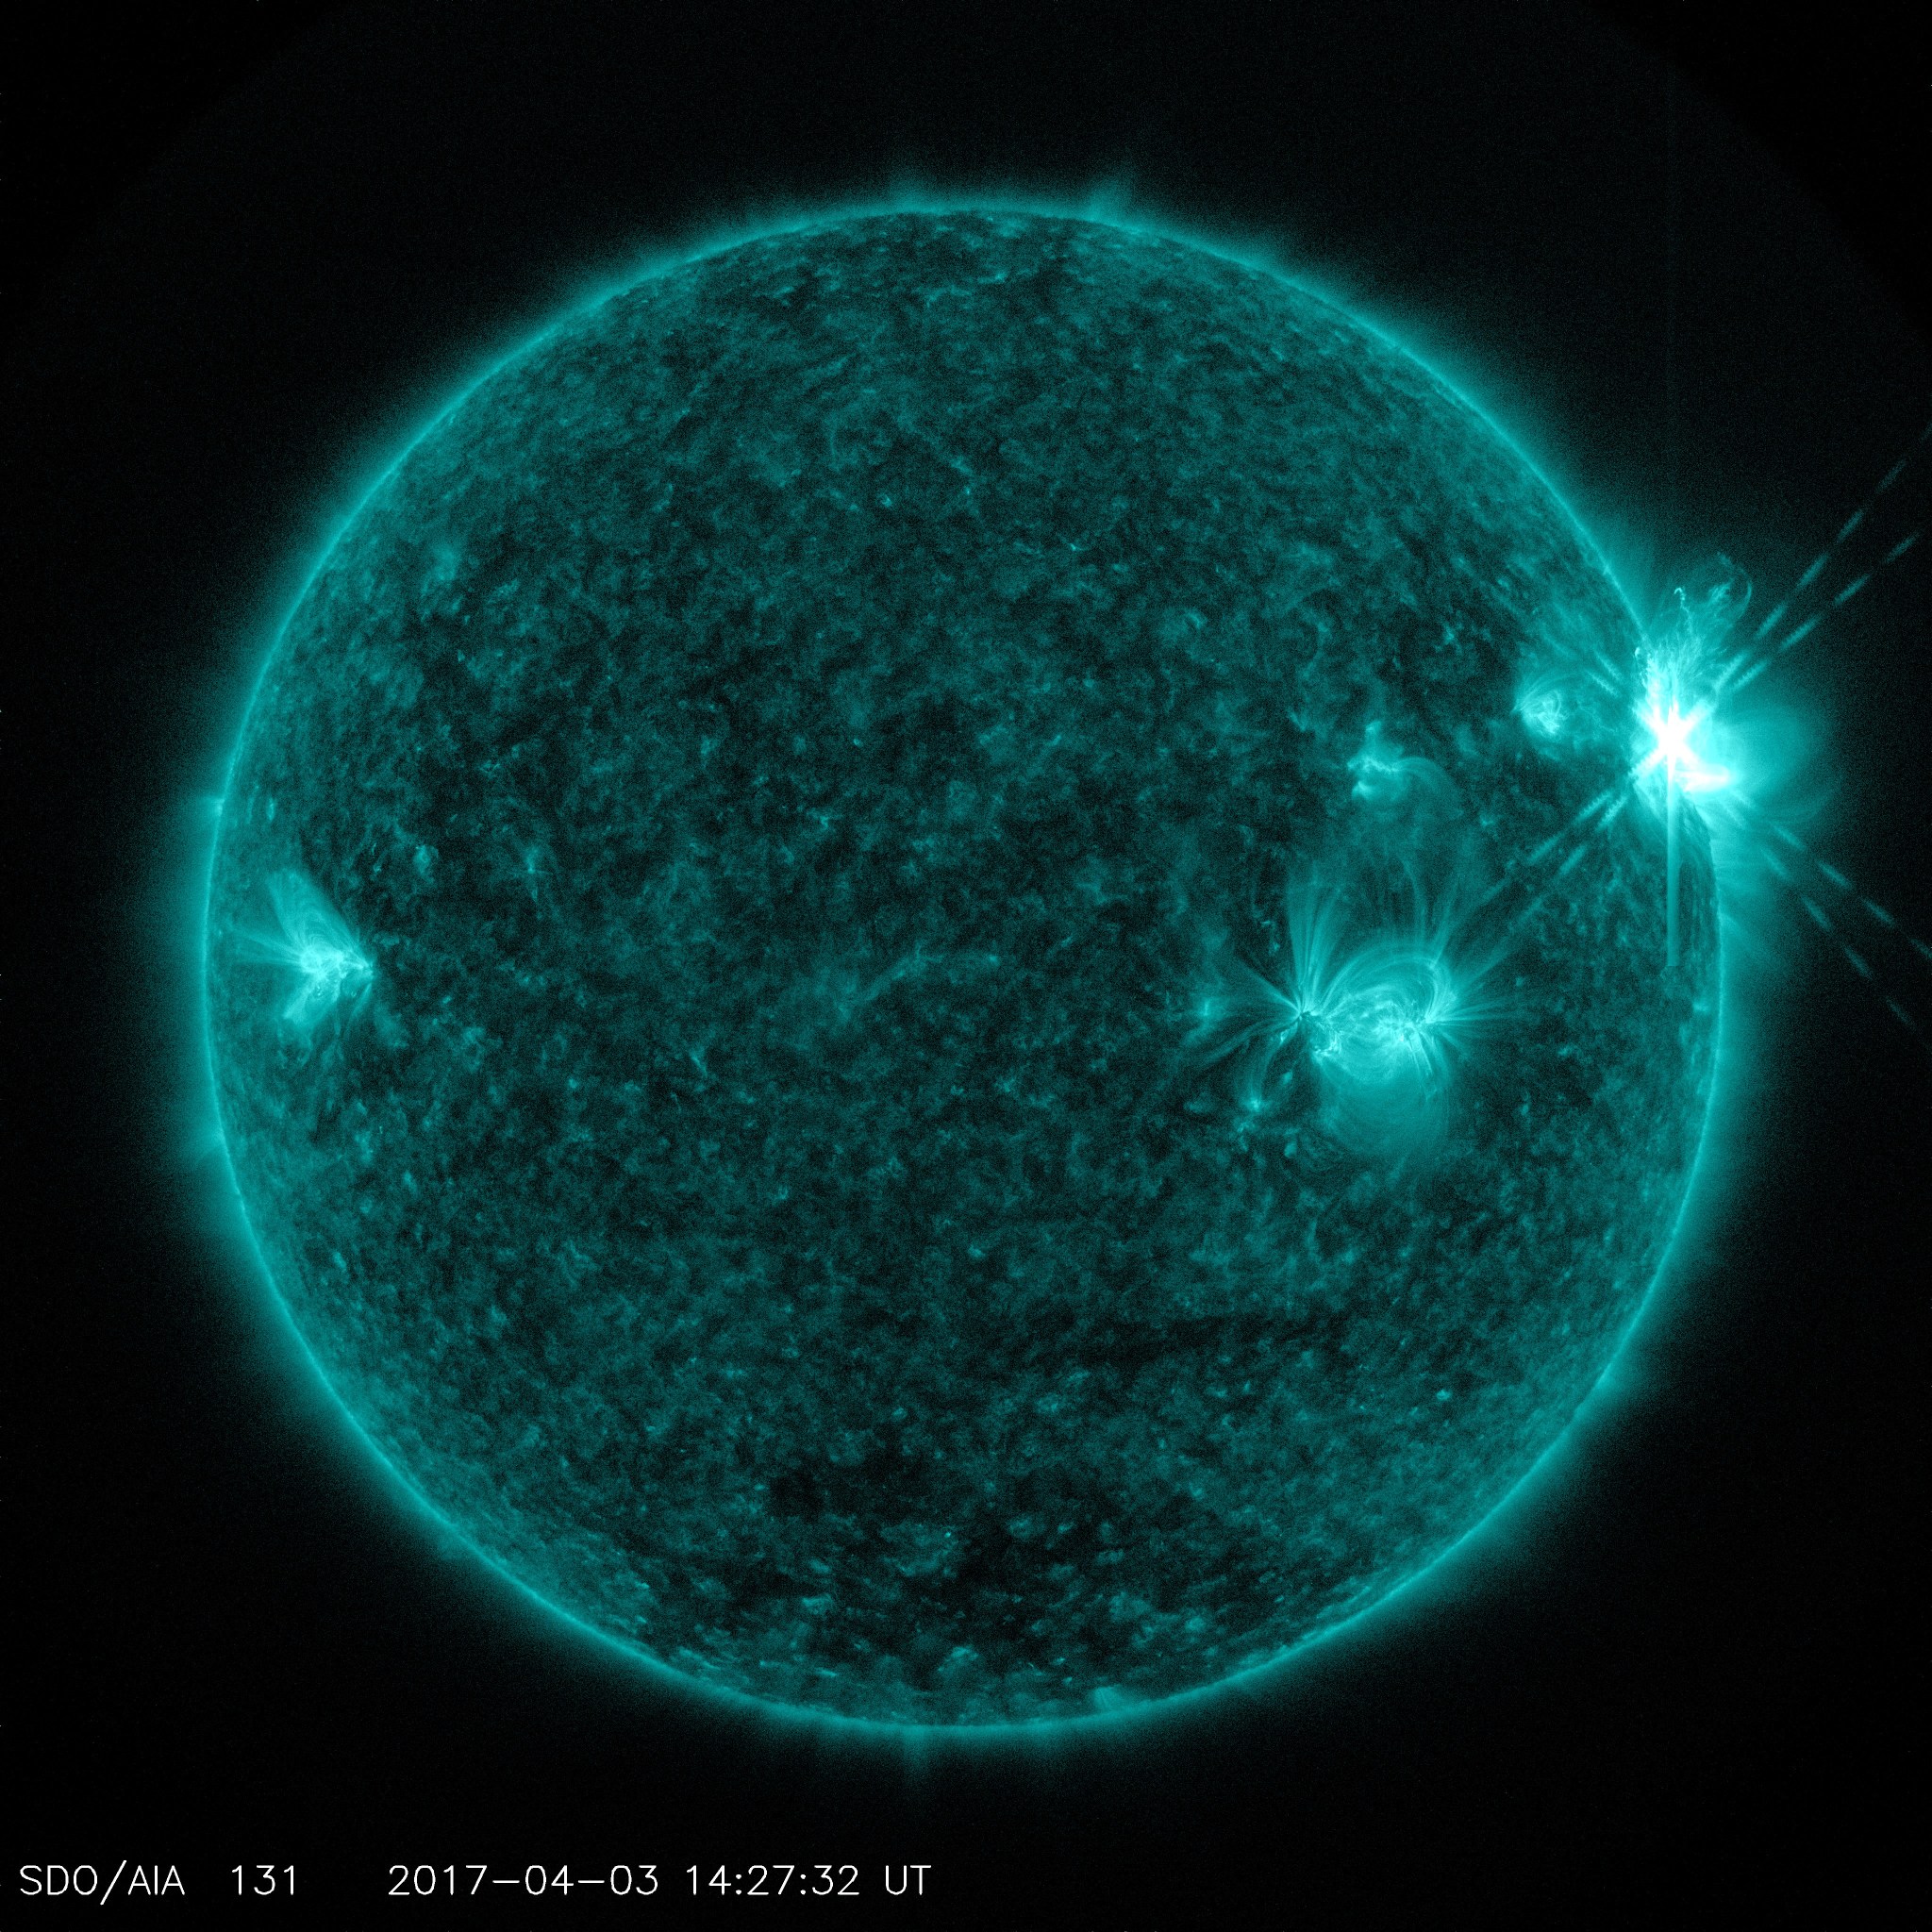 SDO solar flare image from April 3, 2017